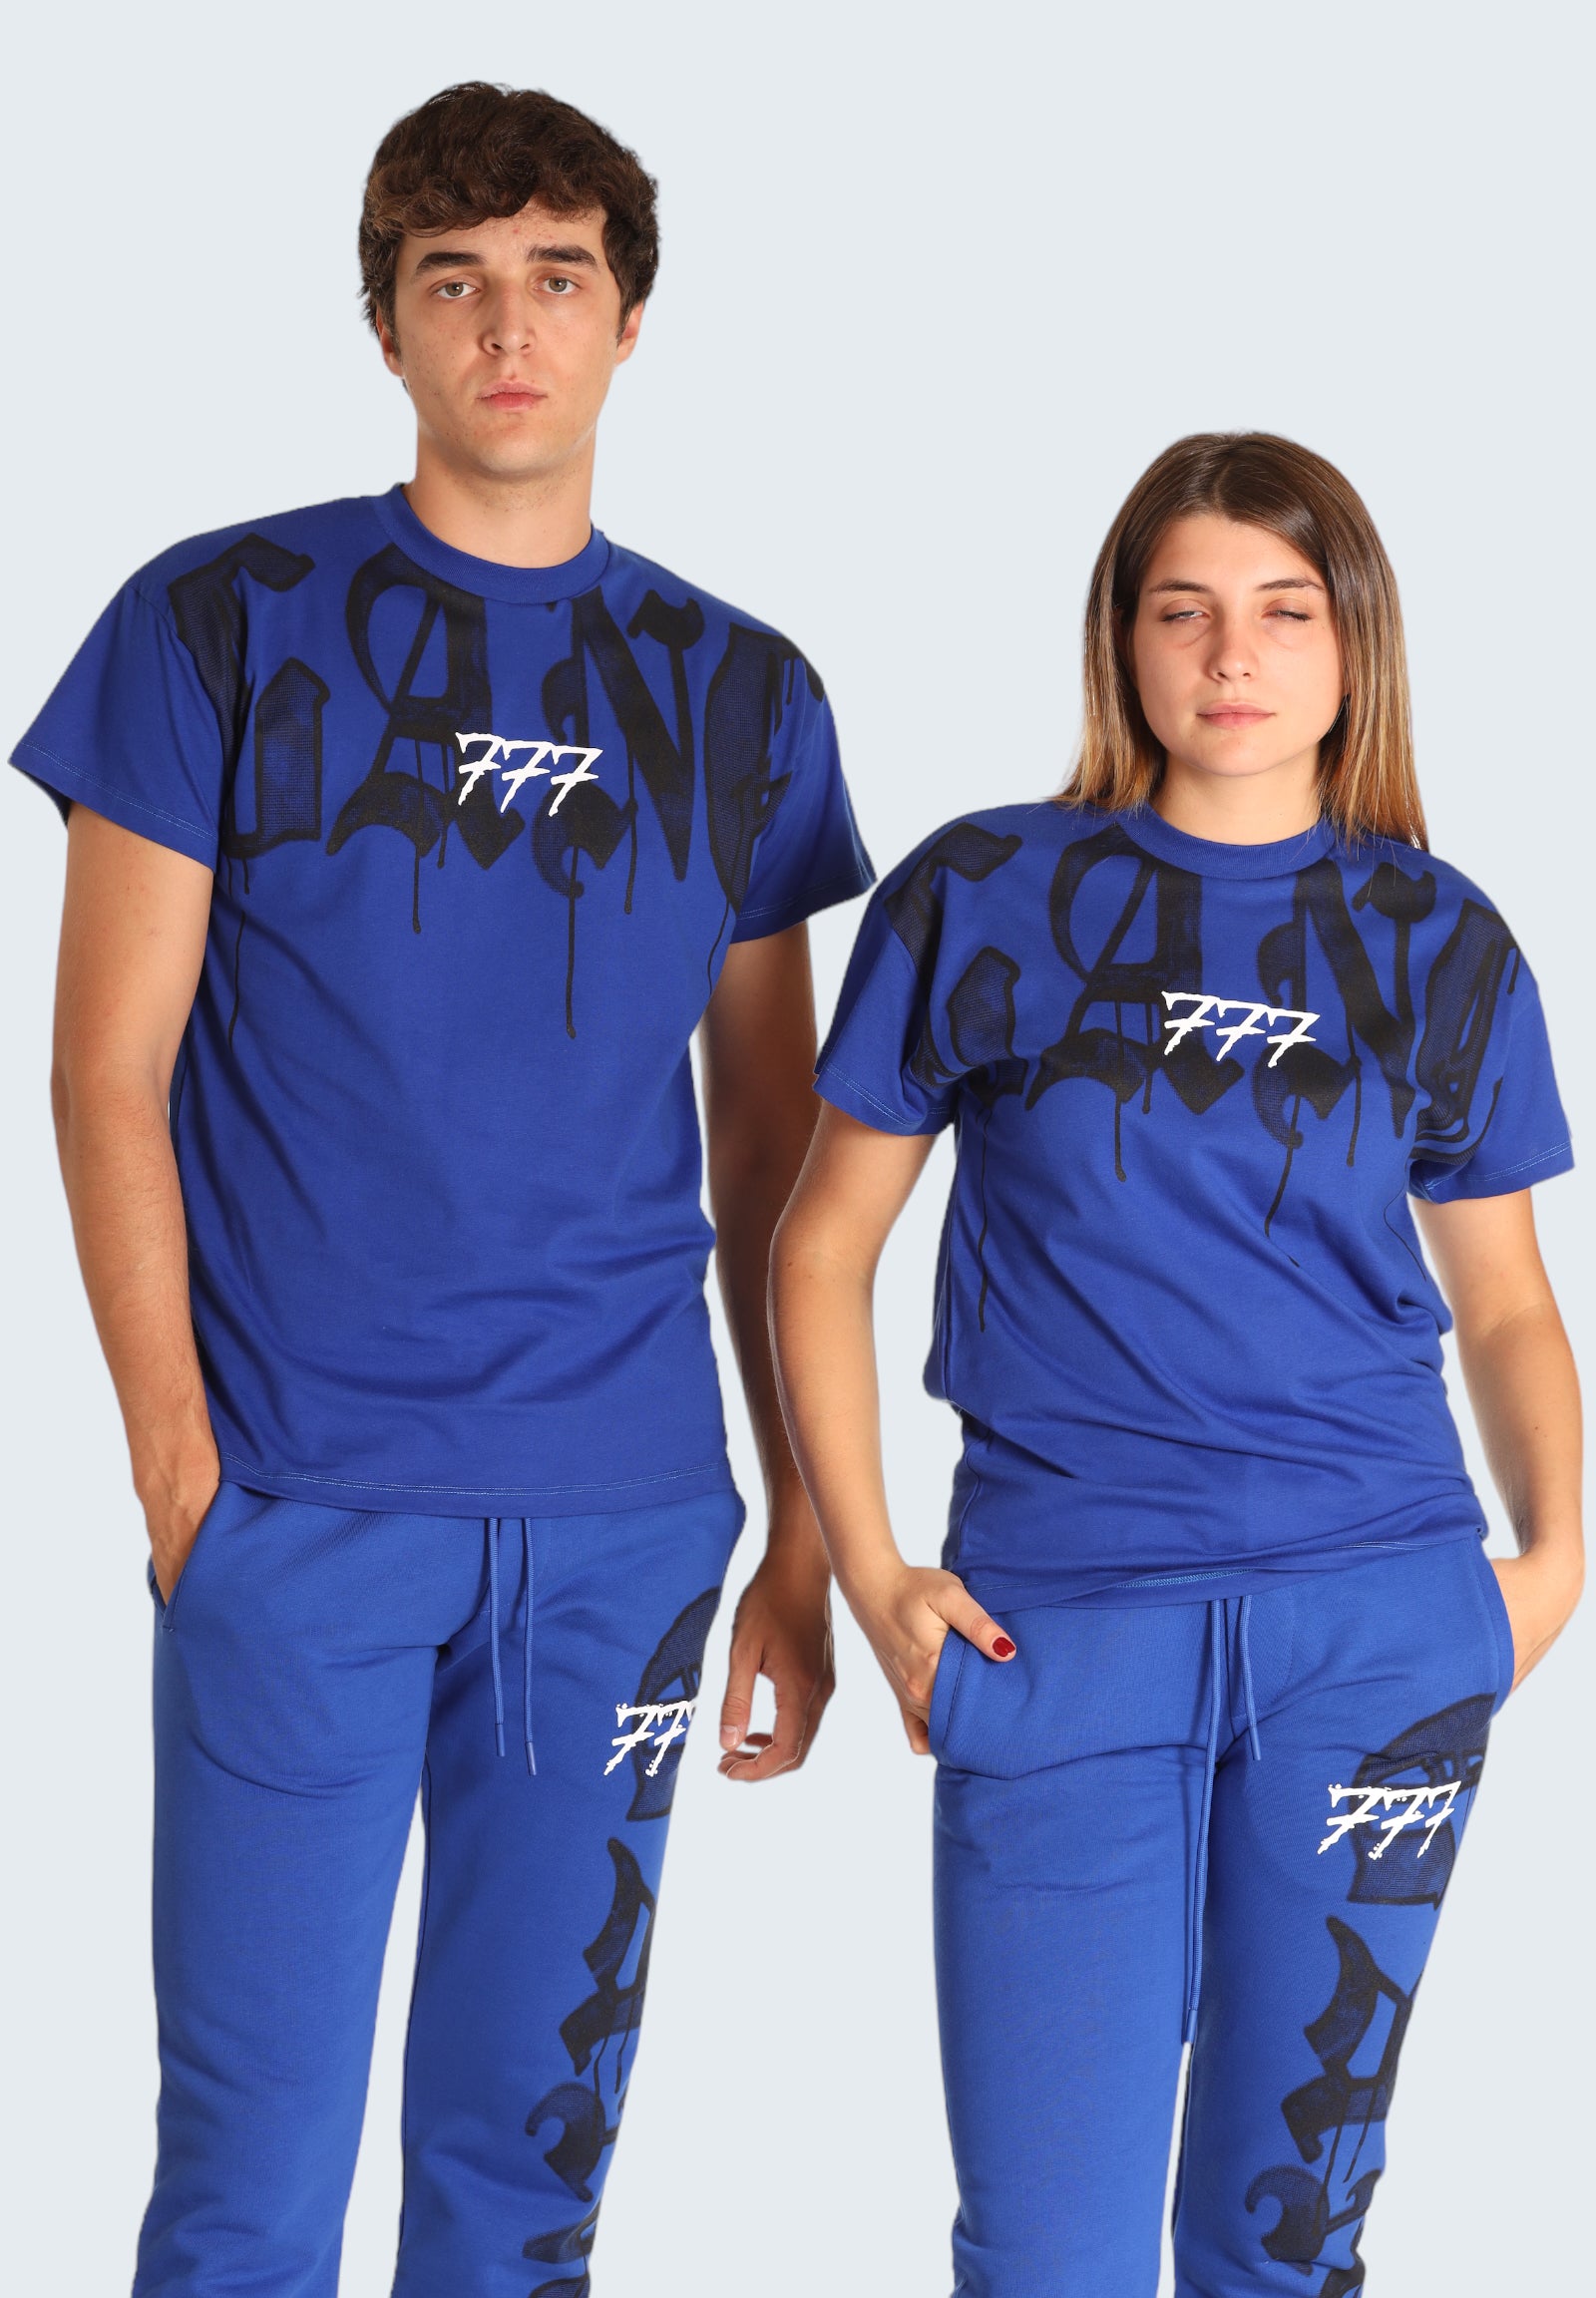 T-Shirt Trsm703 Bluette